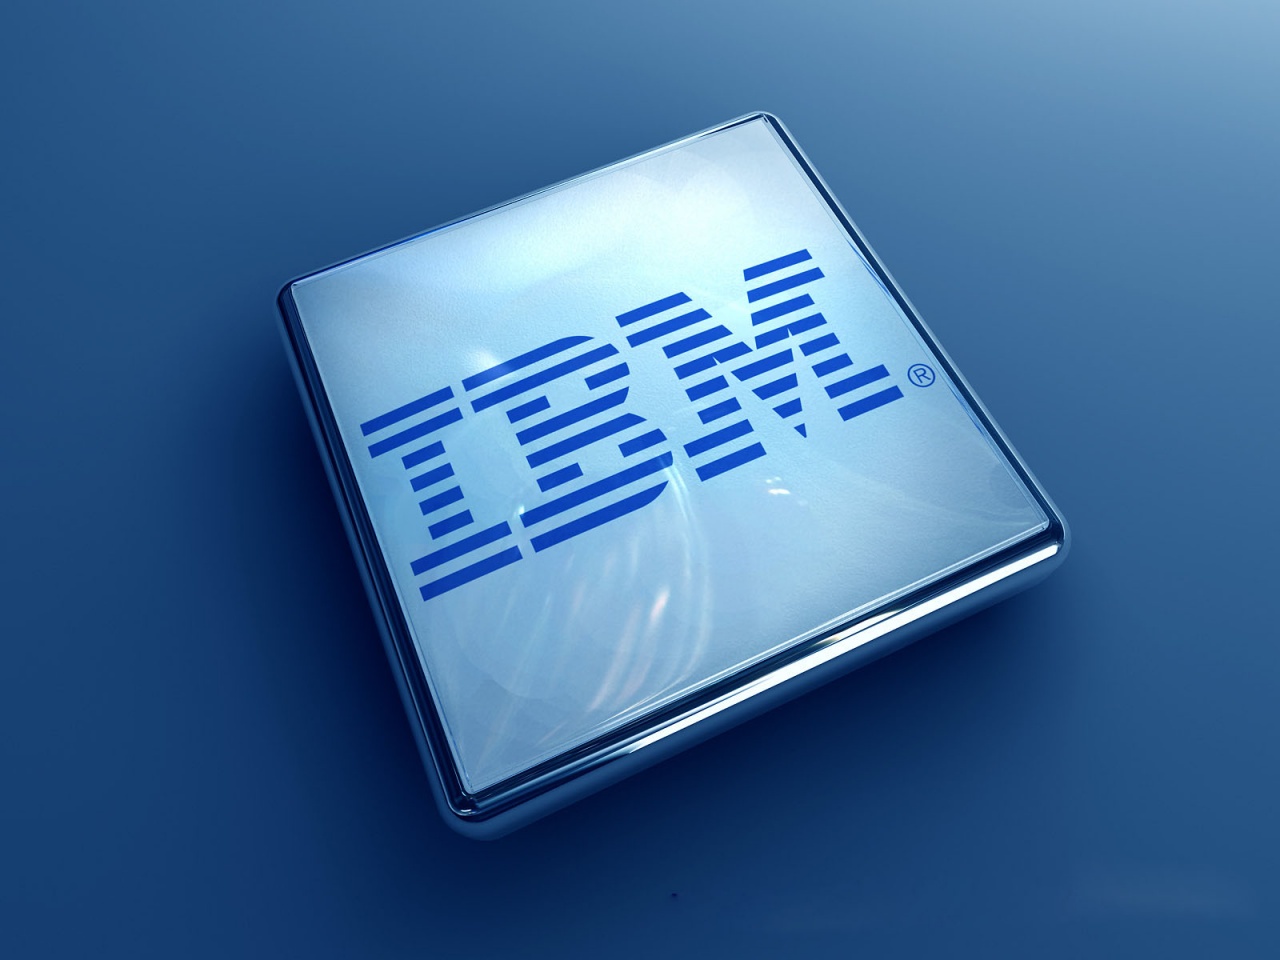 IBM brand